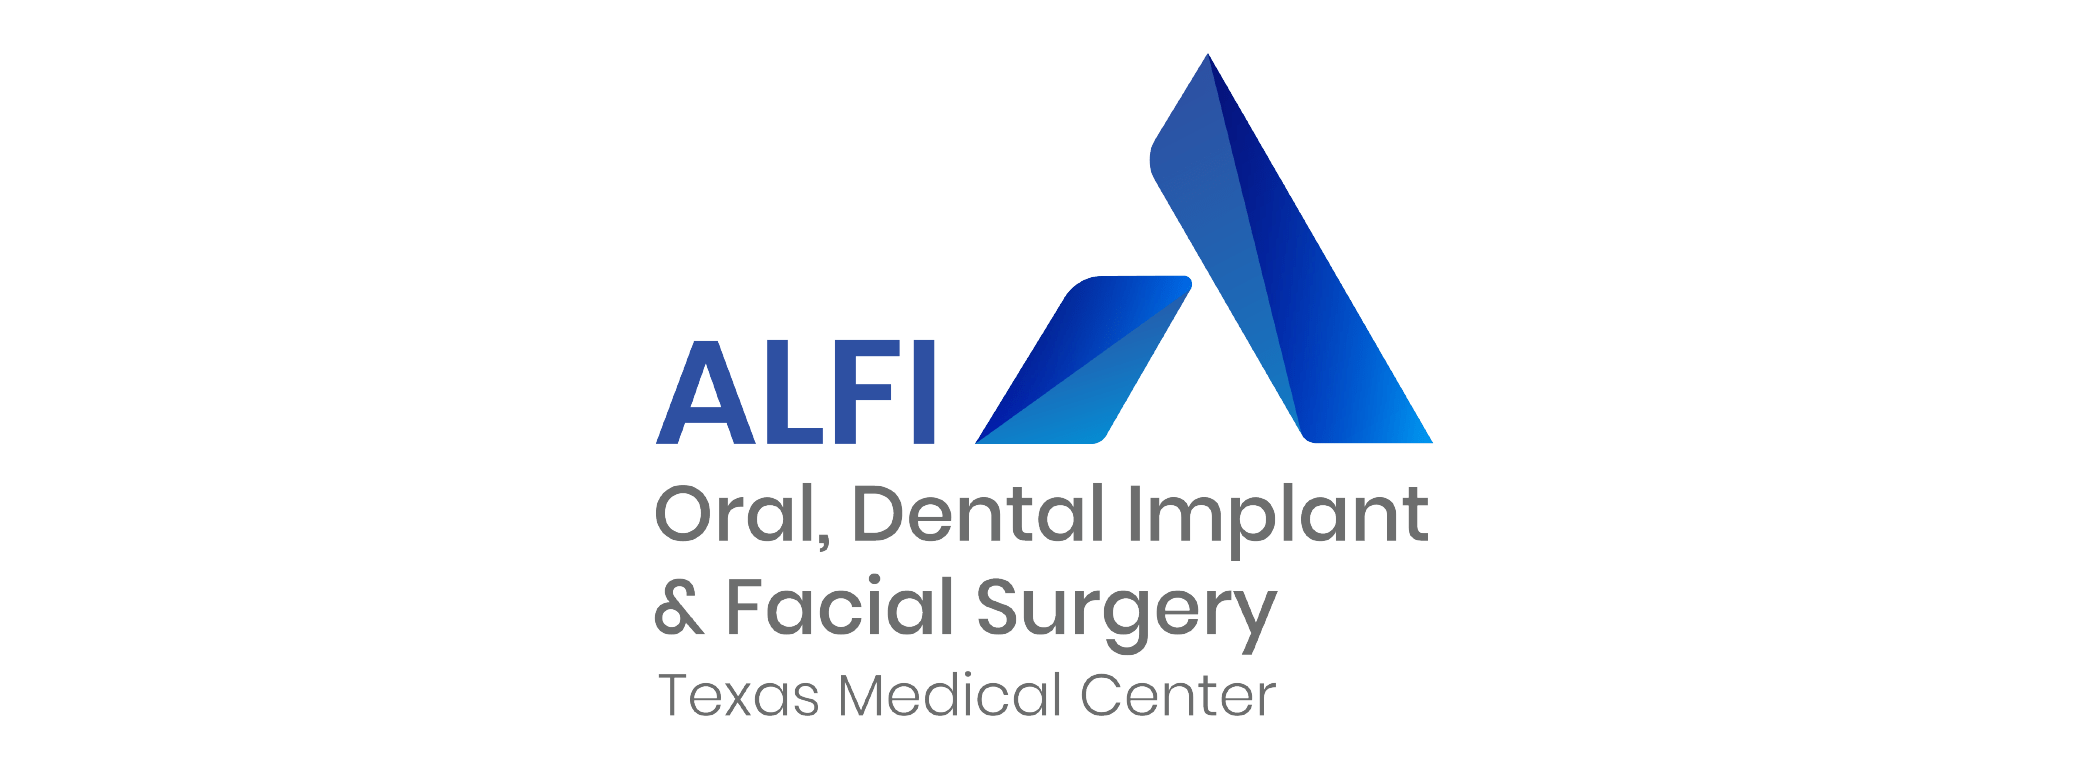 Alfi_Oral_Dental_Implant_&_Facial_Surgery_LOGO